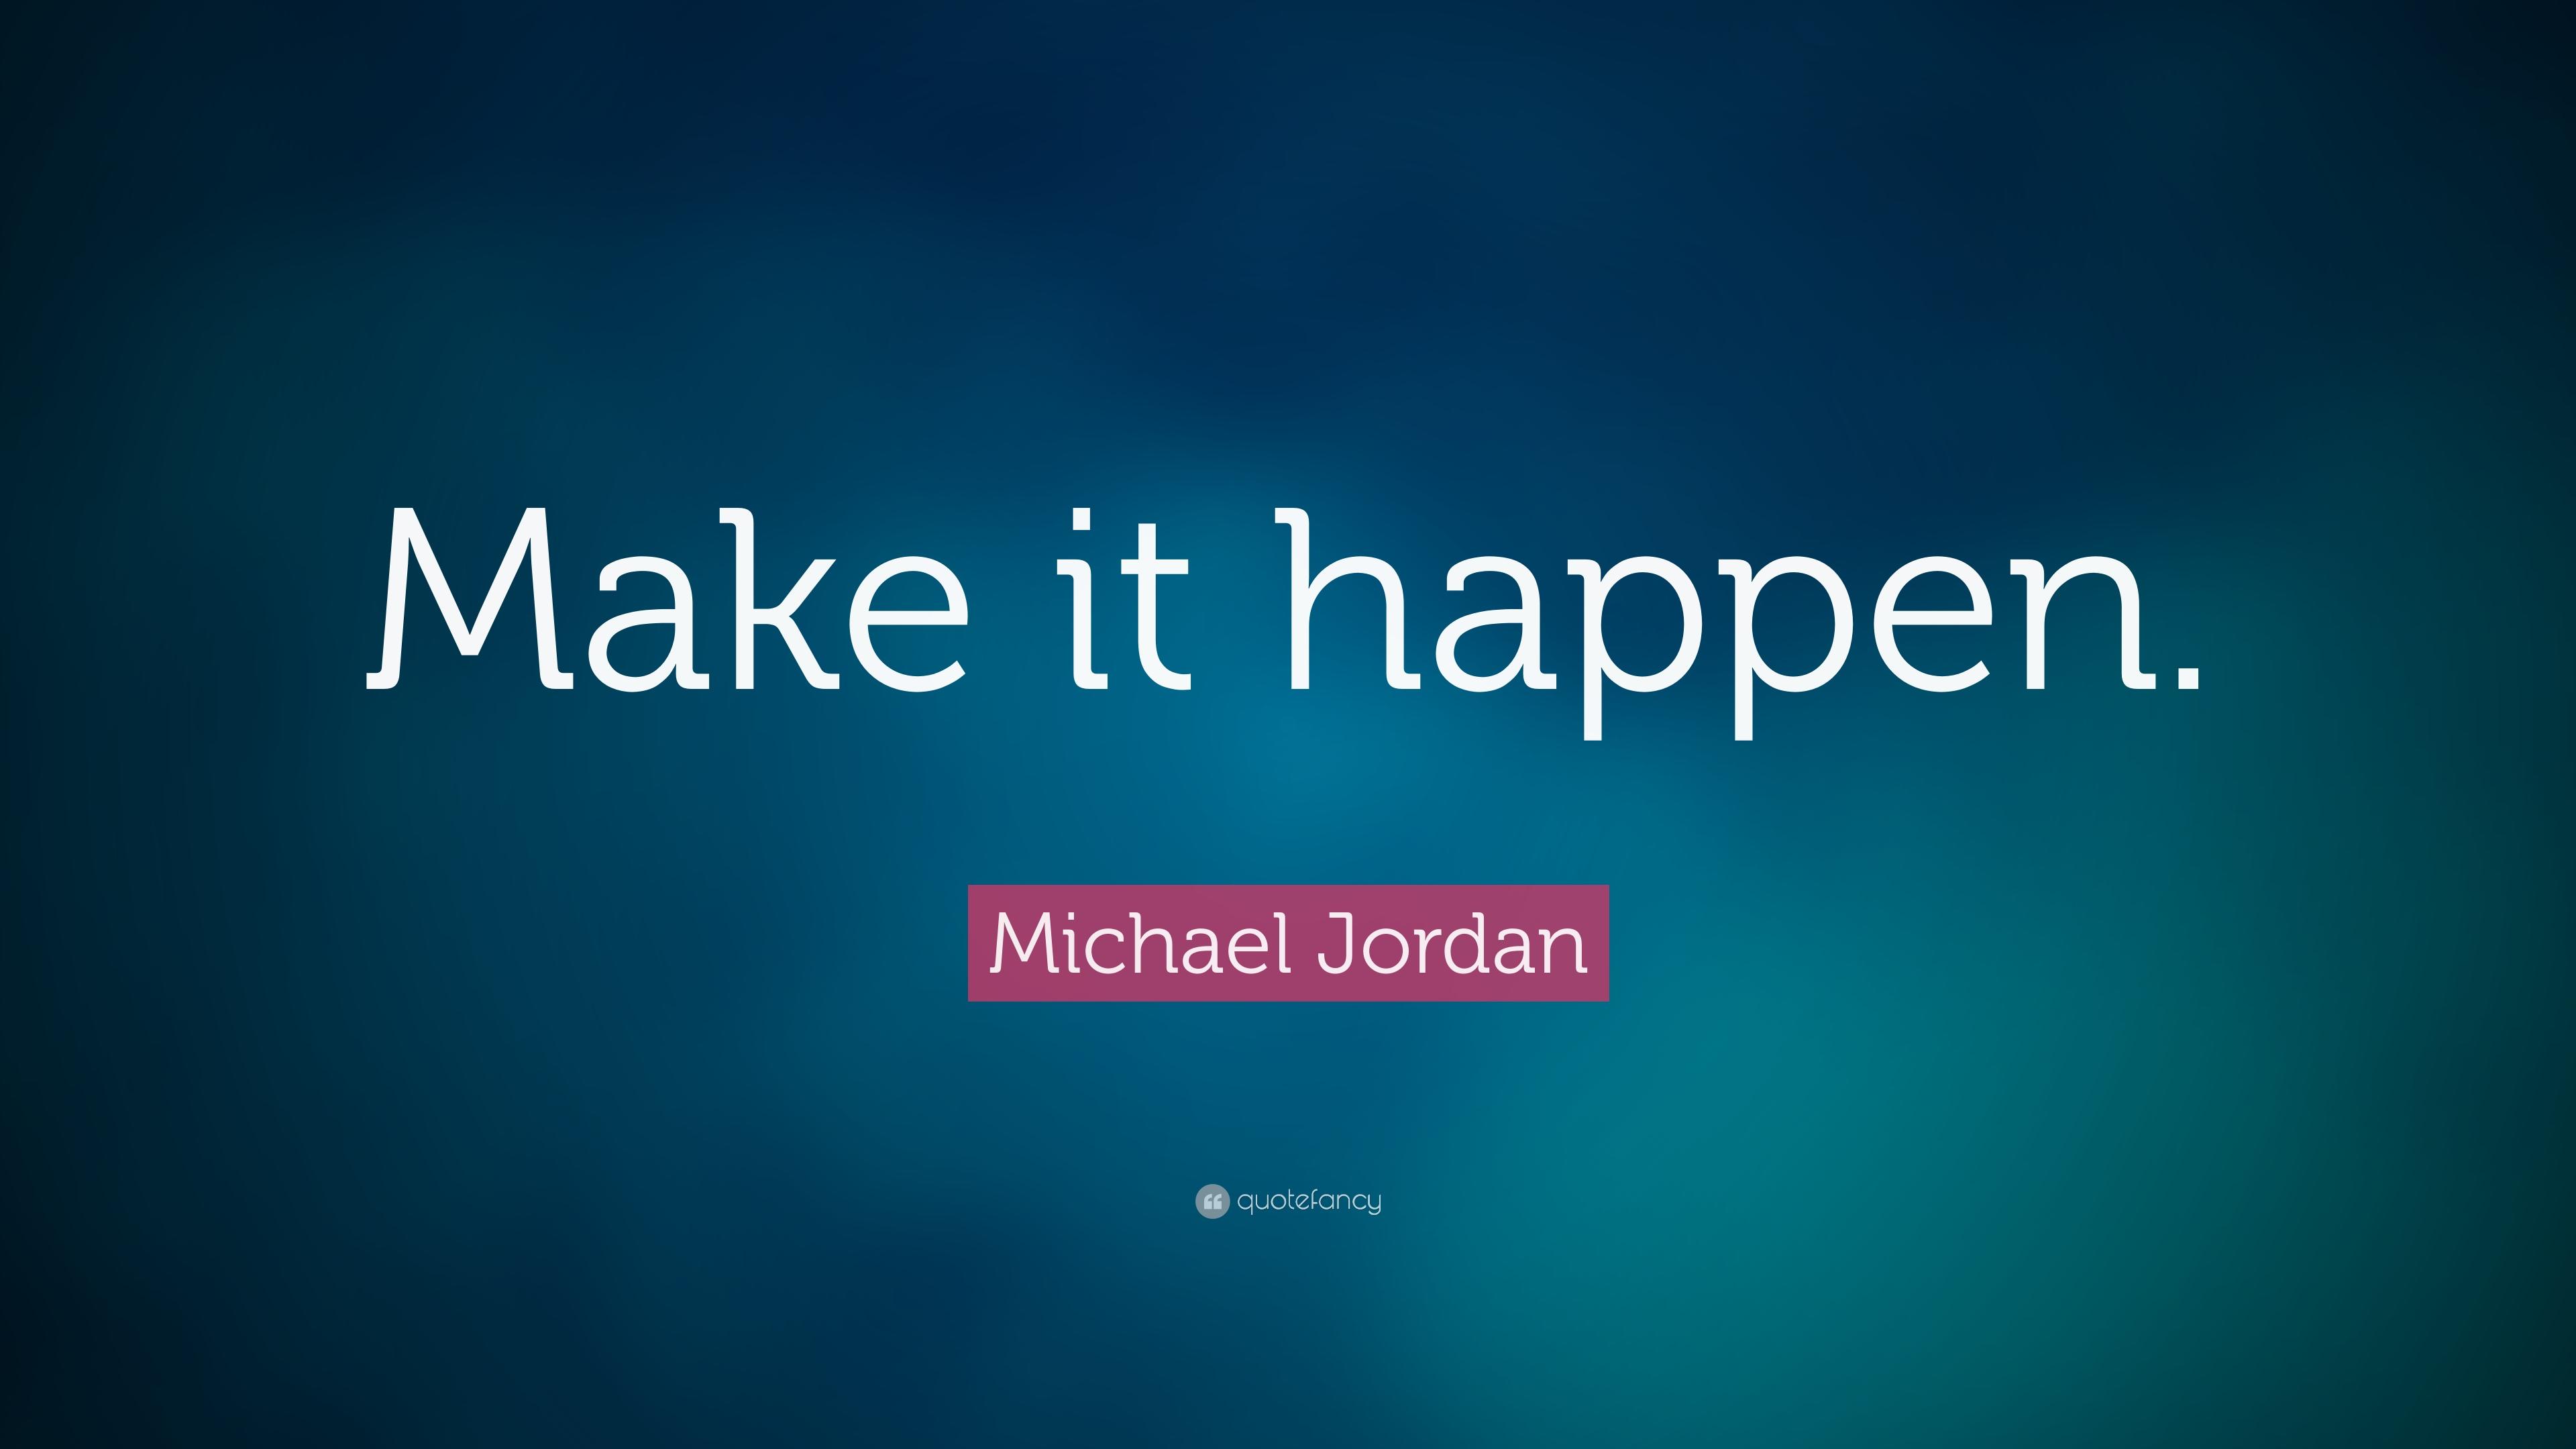 Michael Jordan Quote: “Make it happen.” (31 wallpaper)